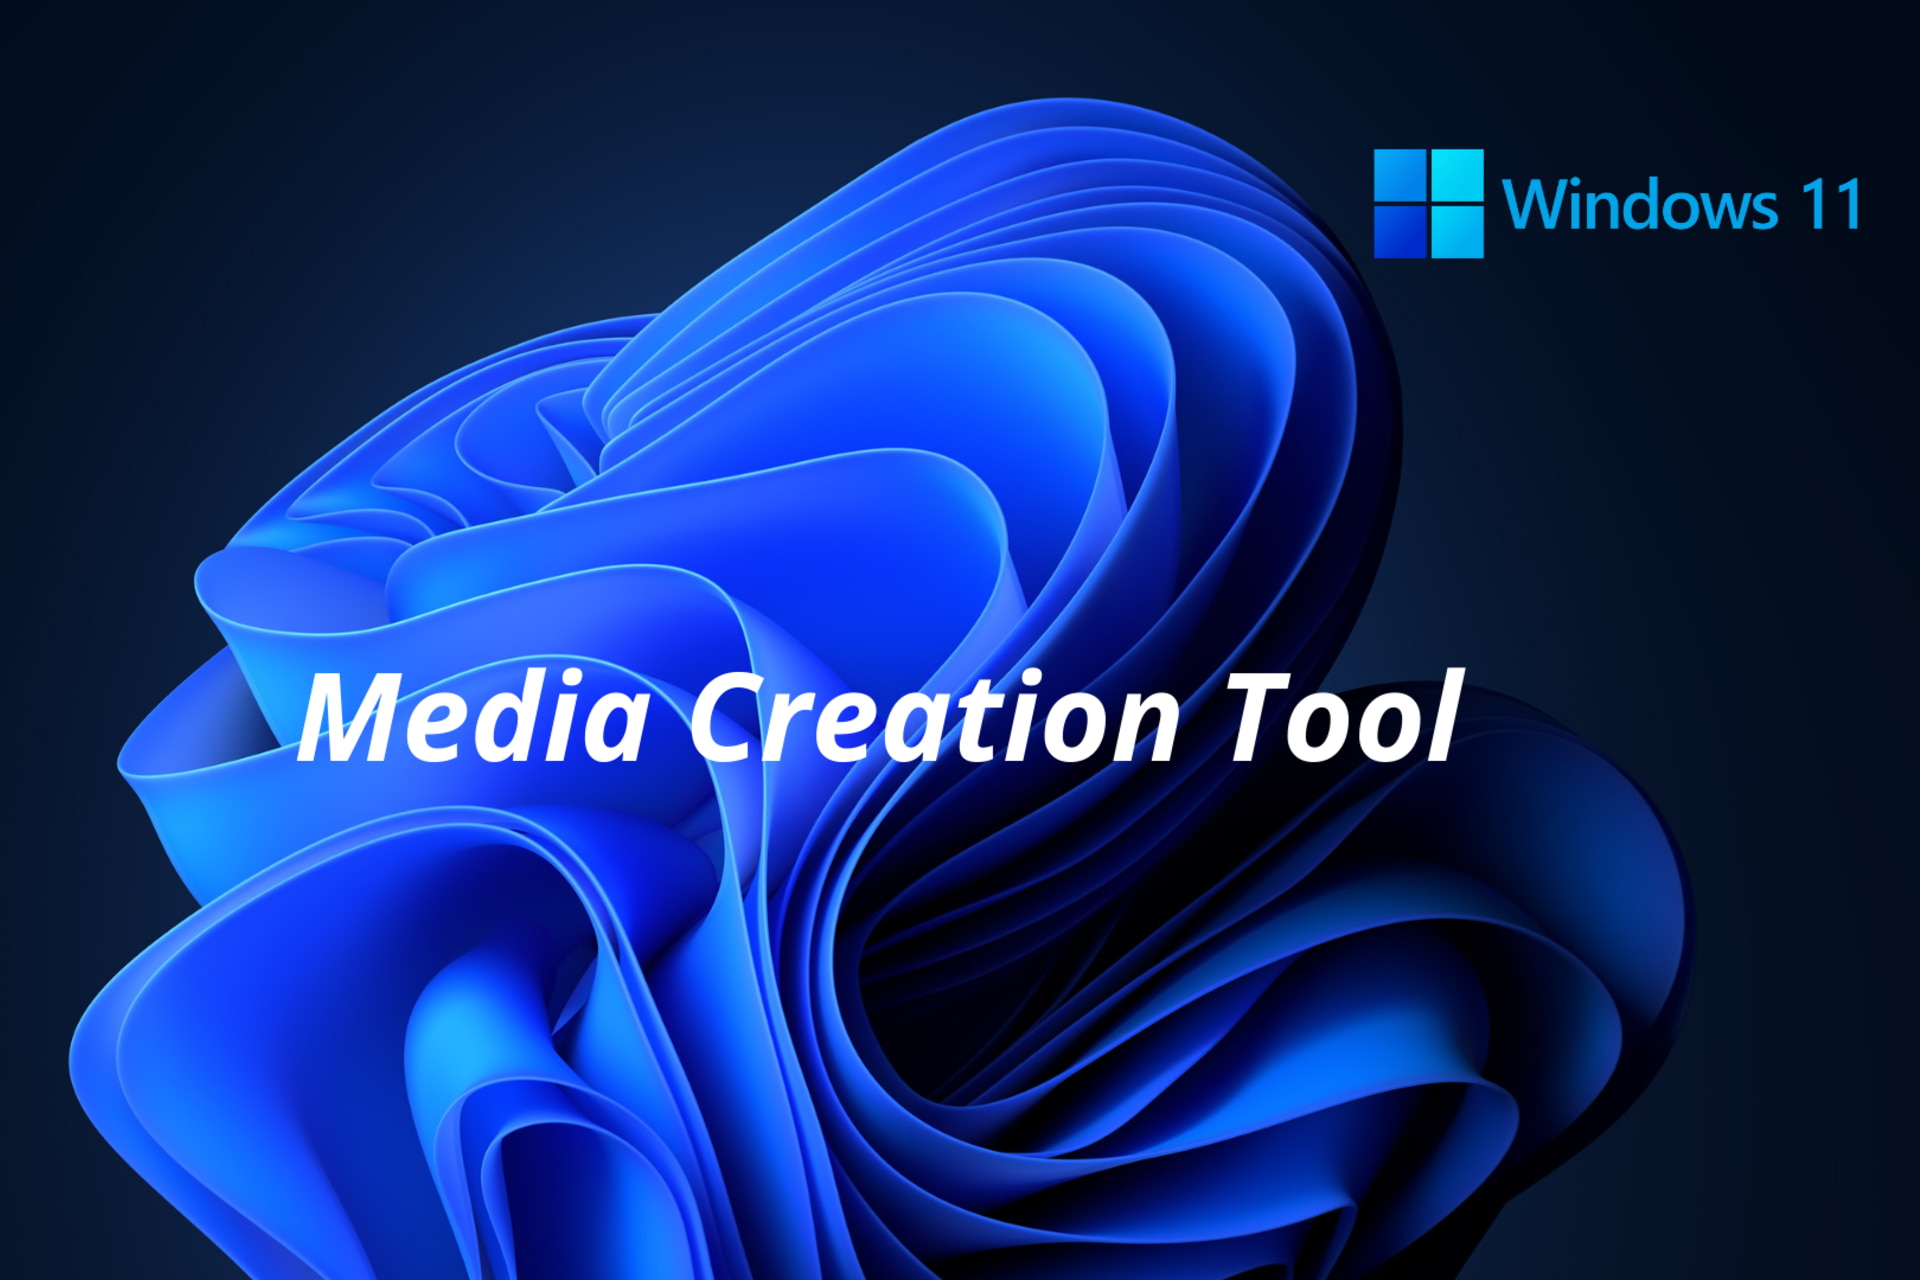 How to use Windows 11 Media Creation Tool